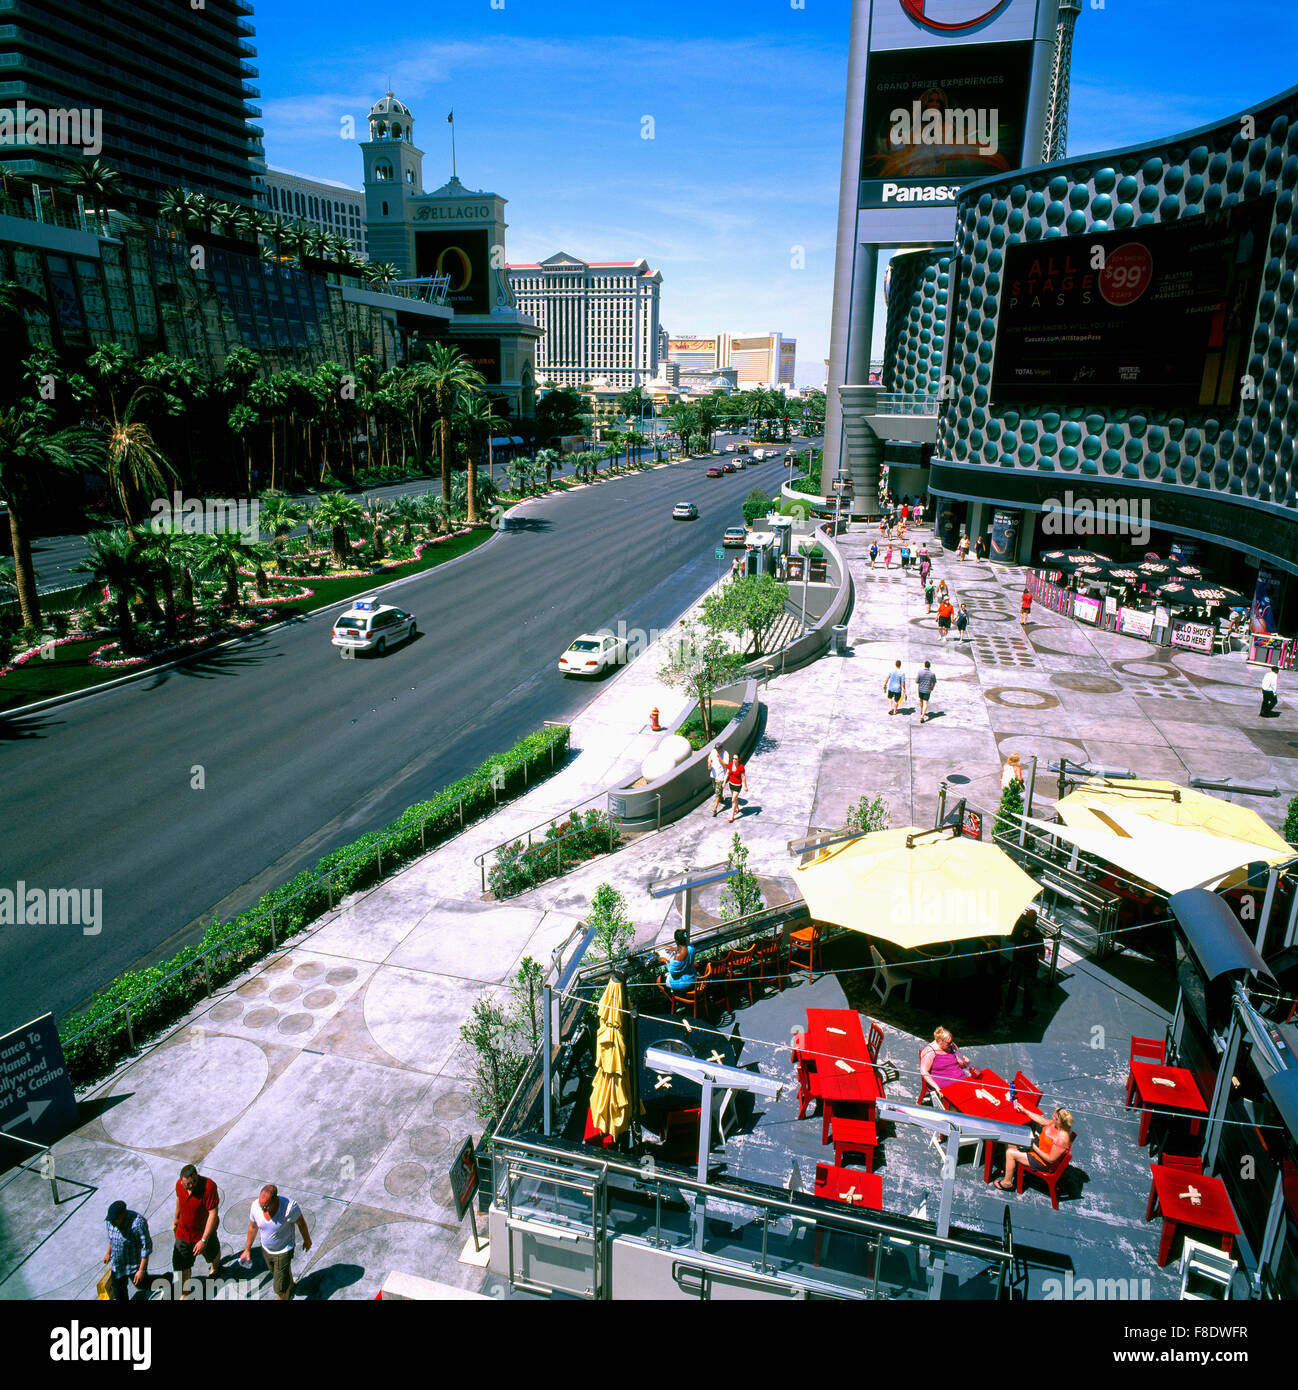 Las Vegas, Nevada, USA - Restaurant im Freien, Hotels und Casinos am Strip (Las Vegas Boulevard) - Straßenszene Stockfoto